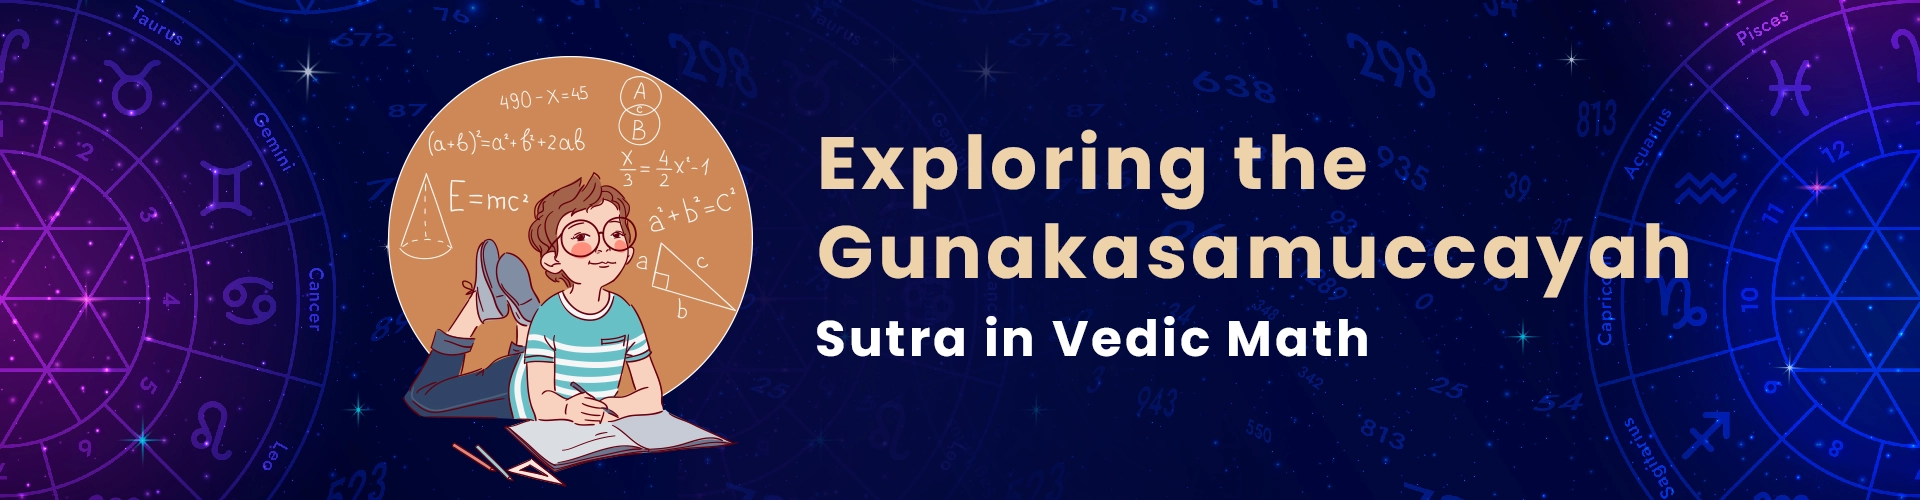 Exploring the Gunakasamuccayah Sutra in Vedic Math